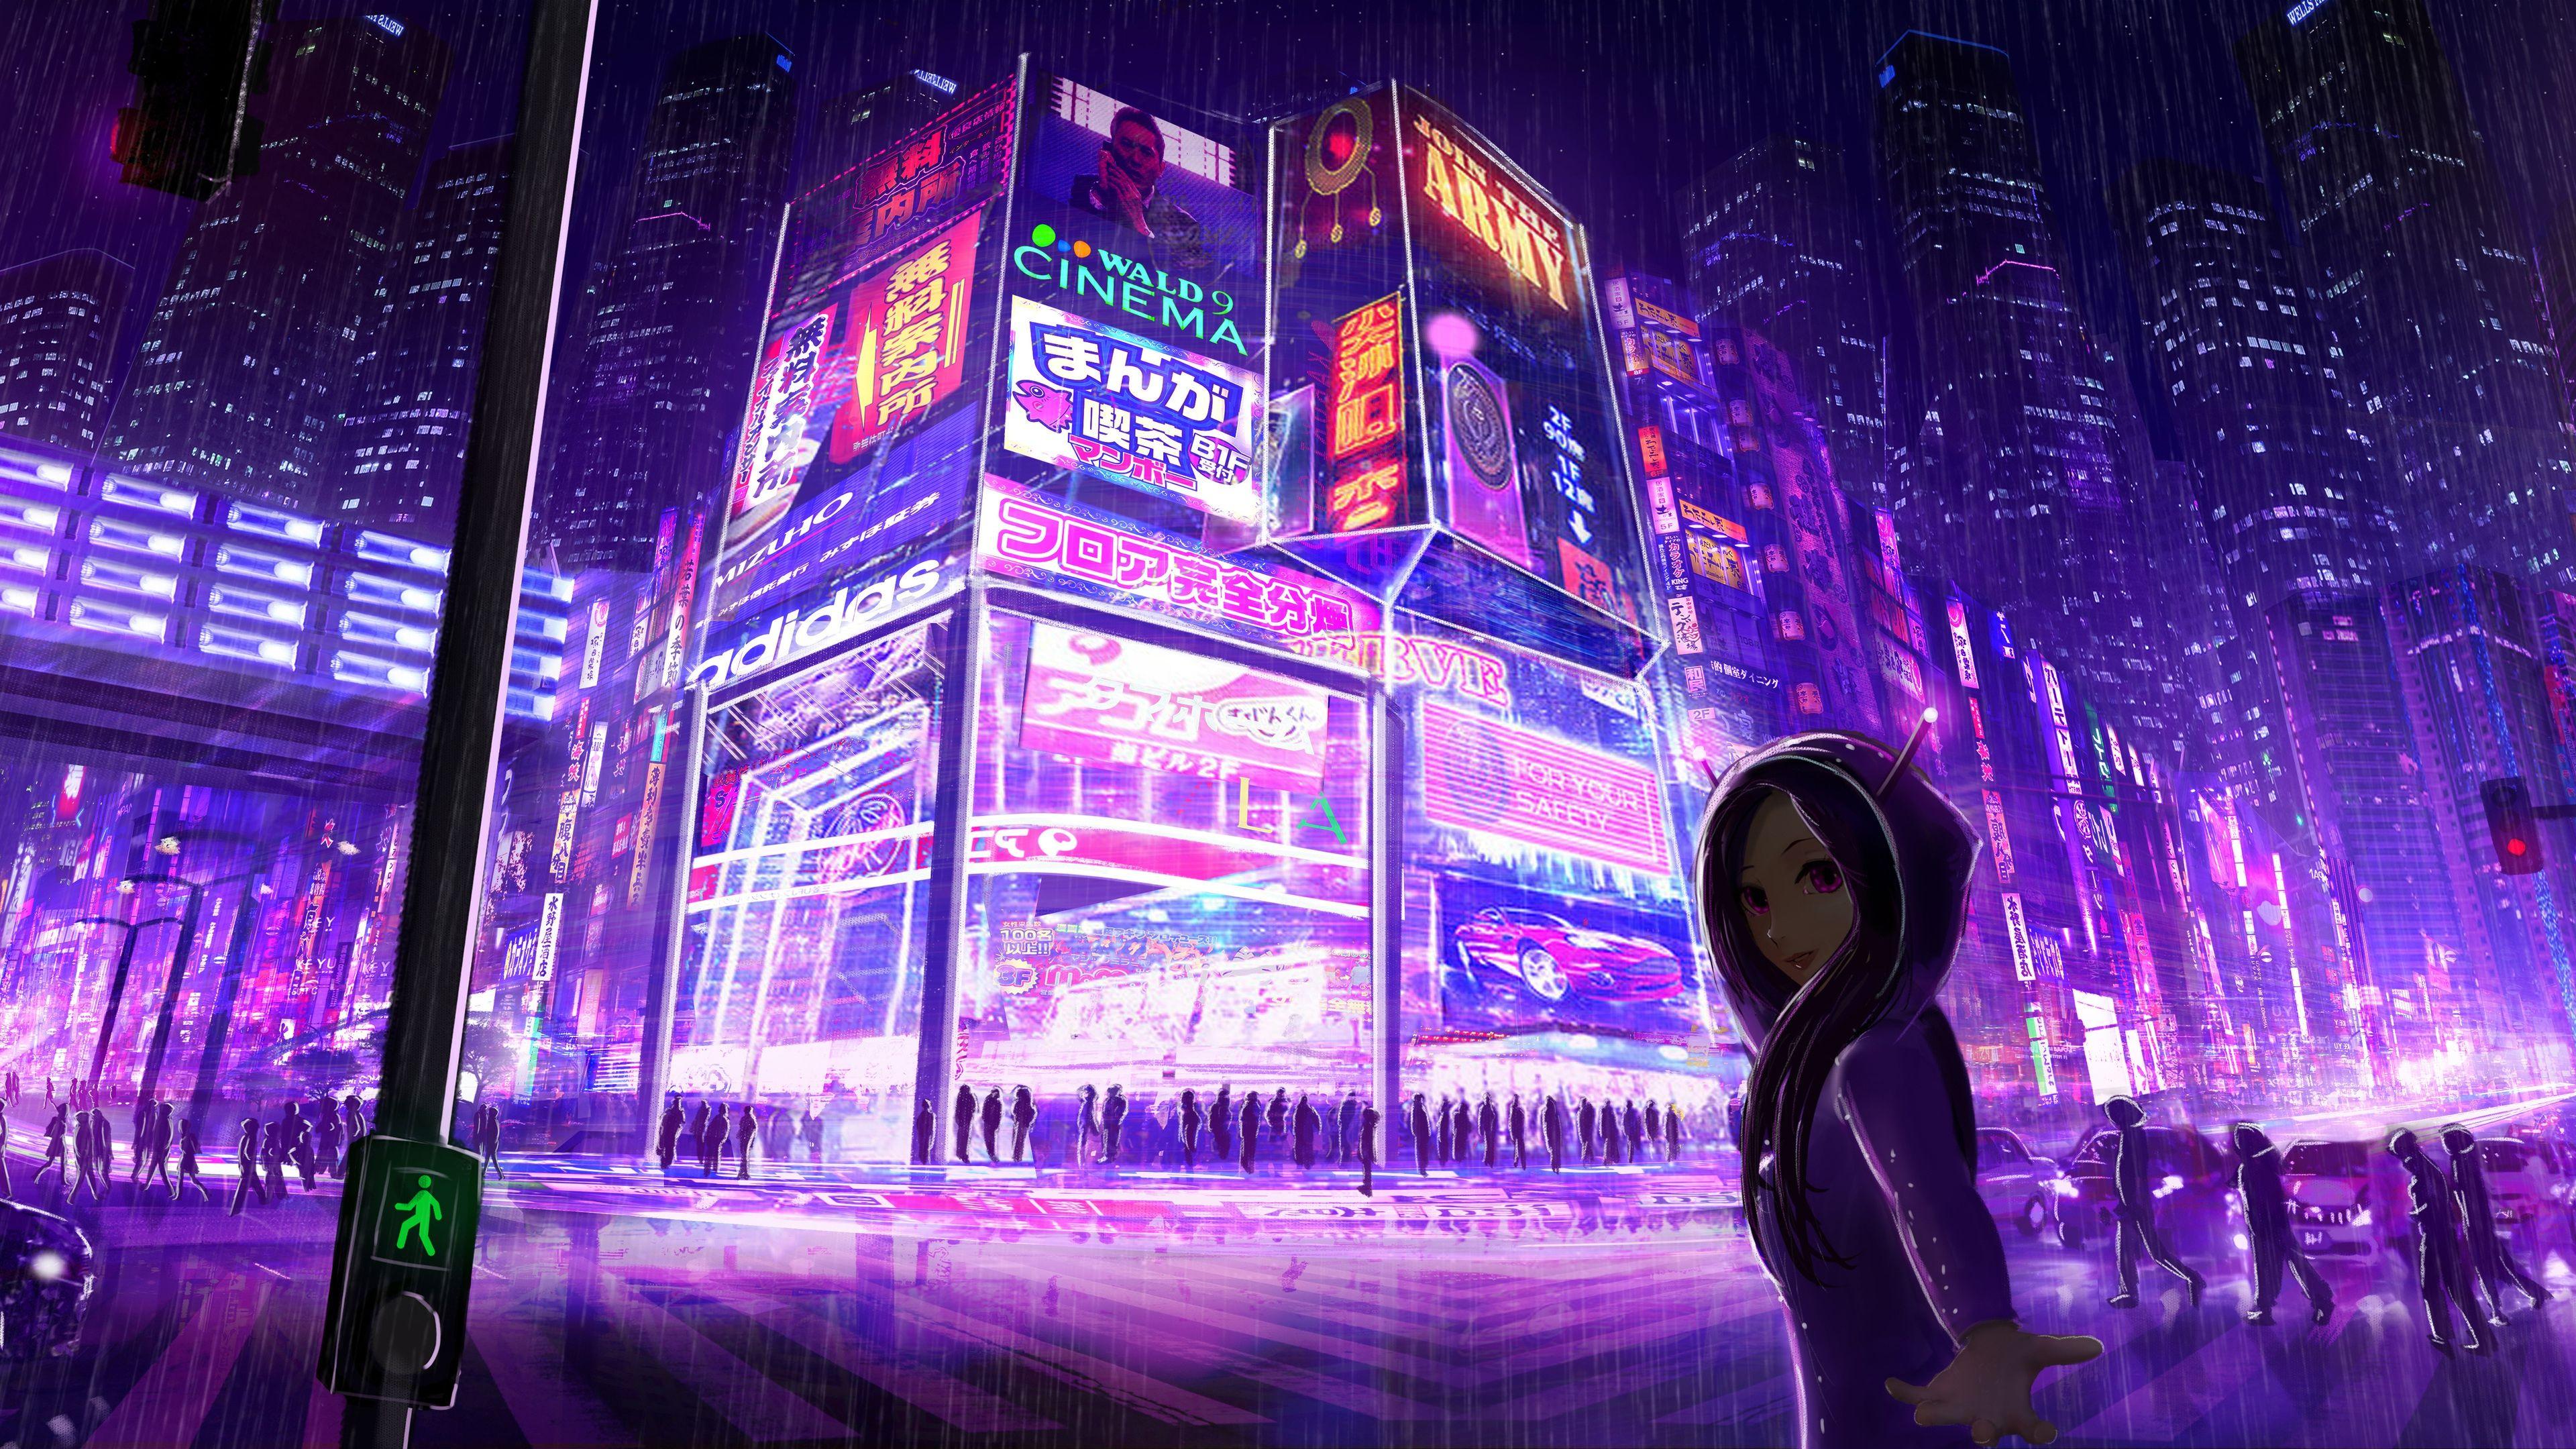 Cyberpunk Neon City Wallpapers Top Free Cyberpunk Neon City Backgrounds Wallpaperaccess